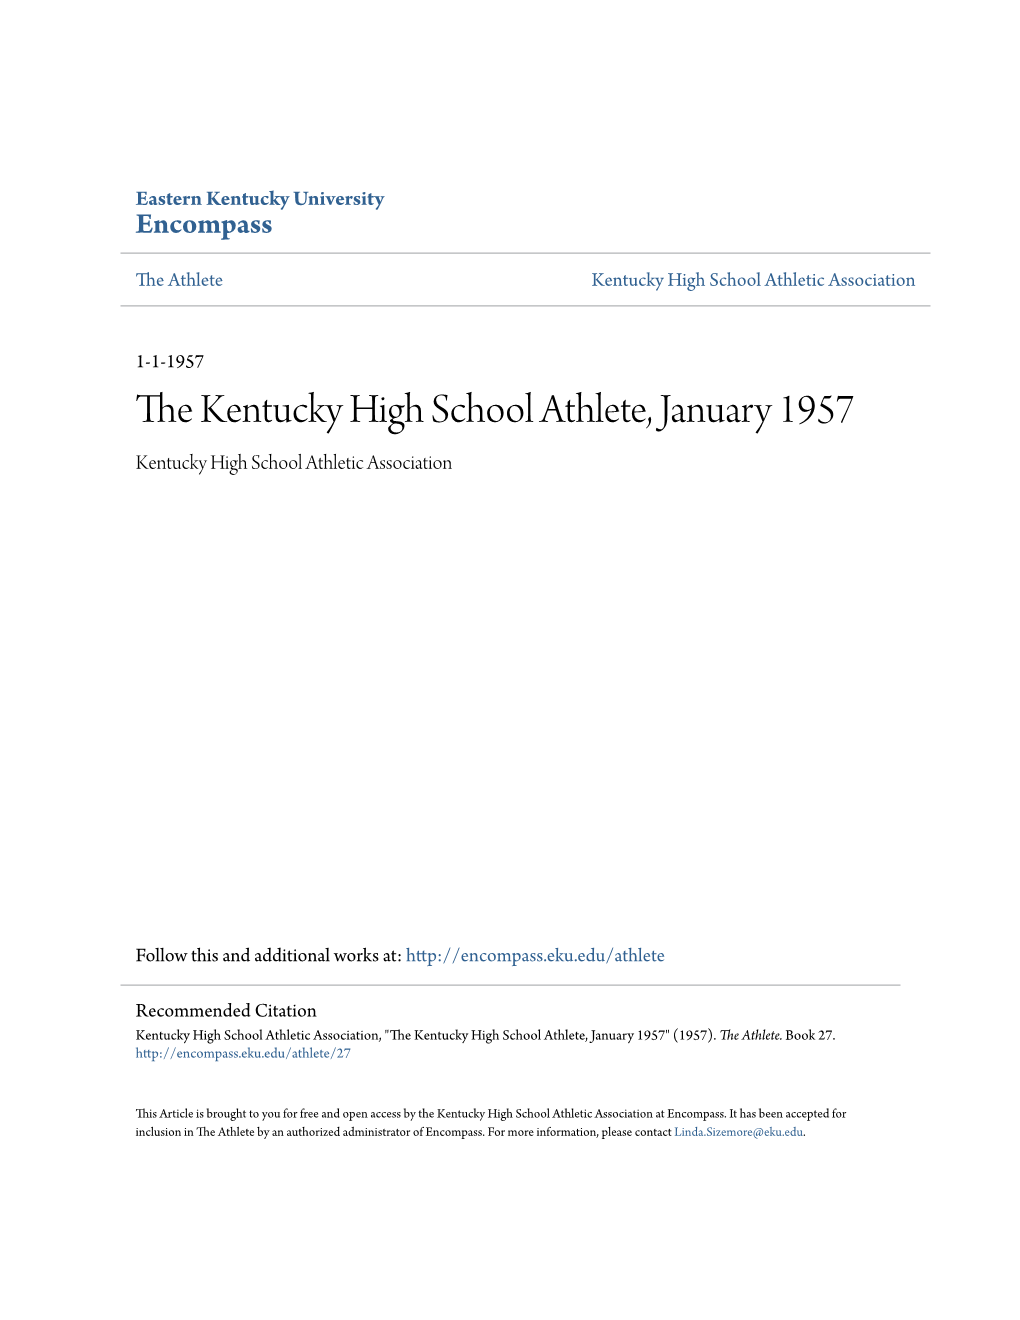 The Kentucky High School Athlete, January 1957 Kentucky High School Athletic Association